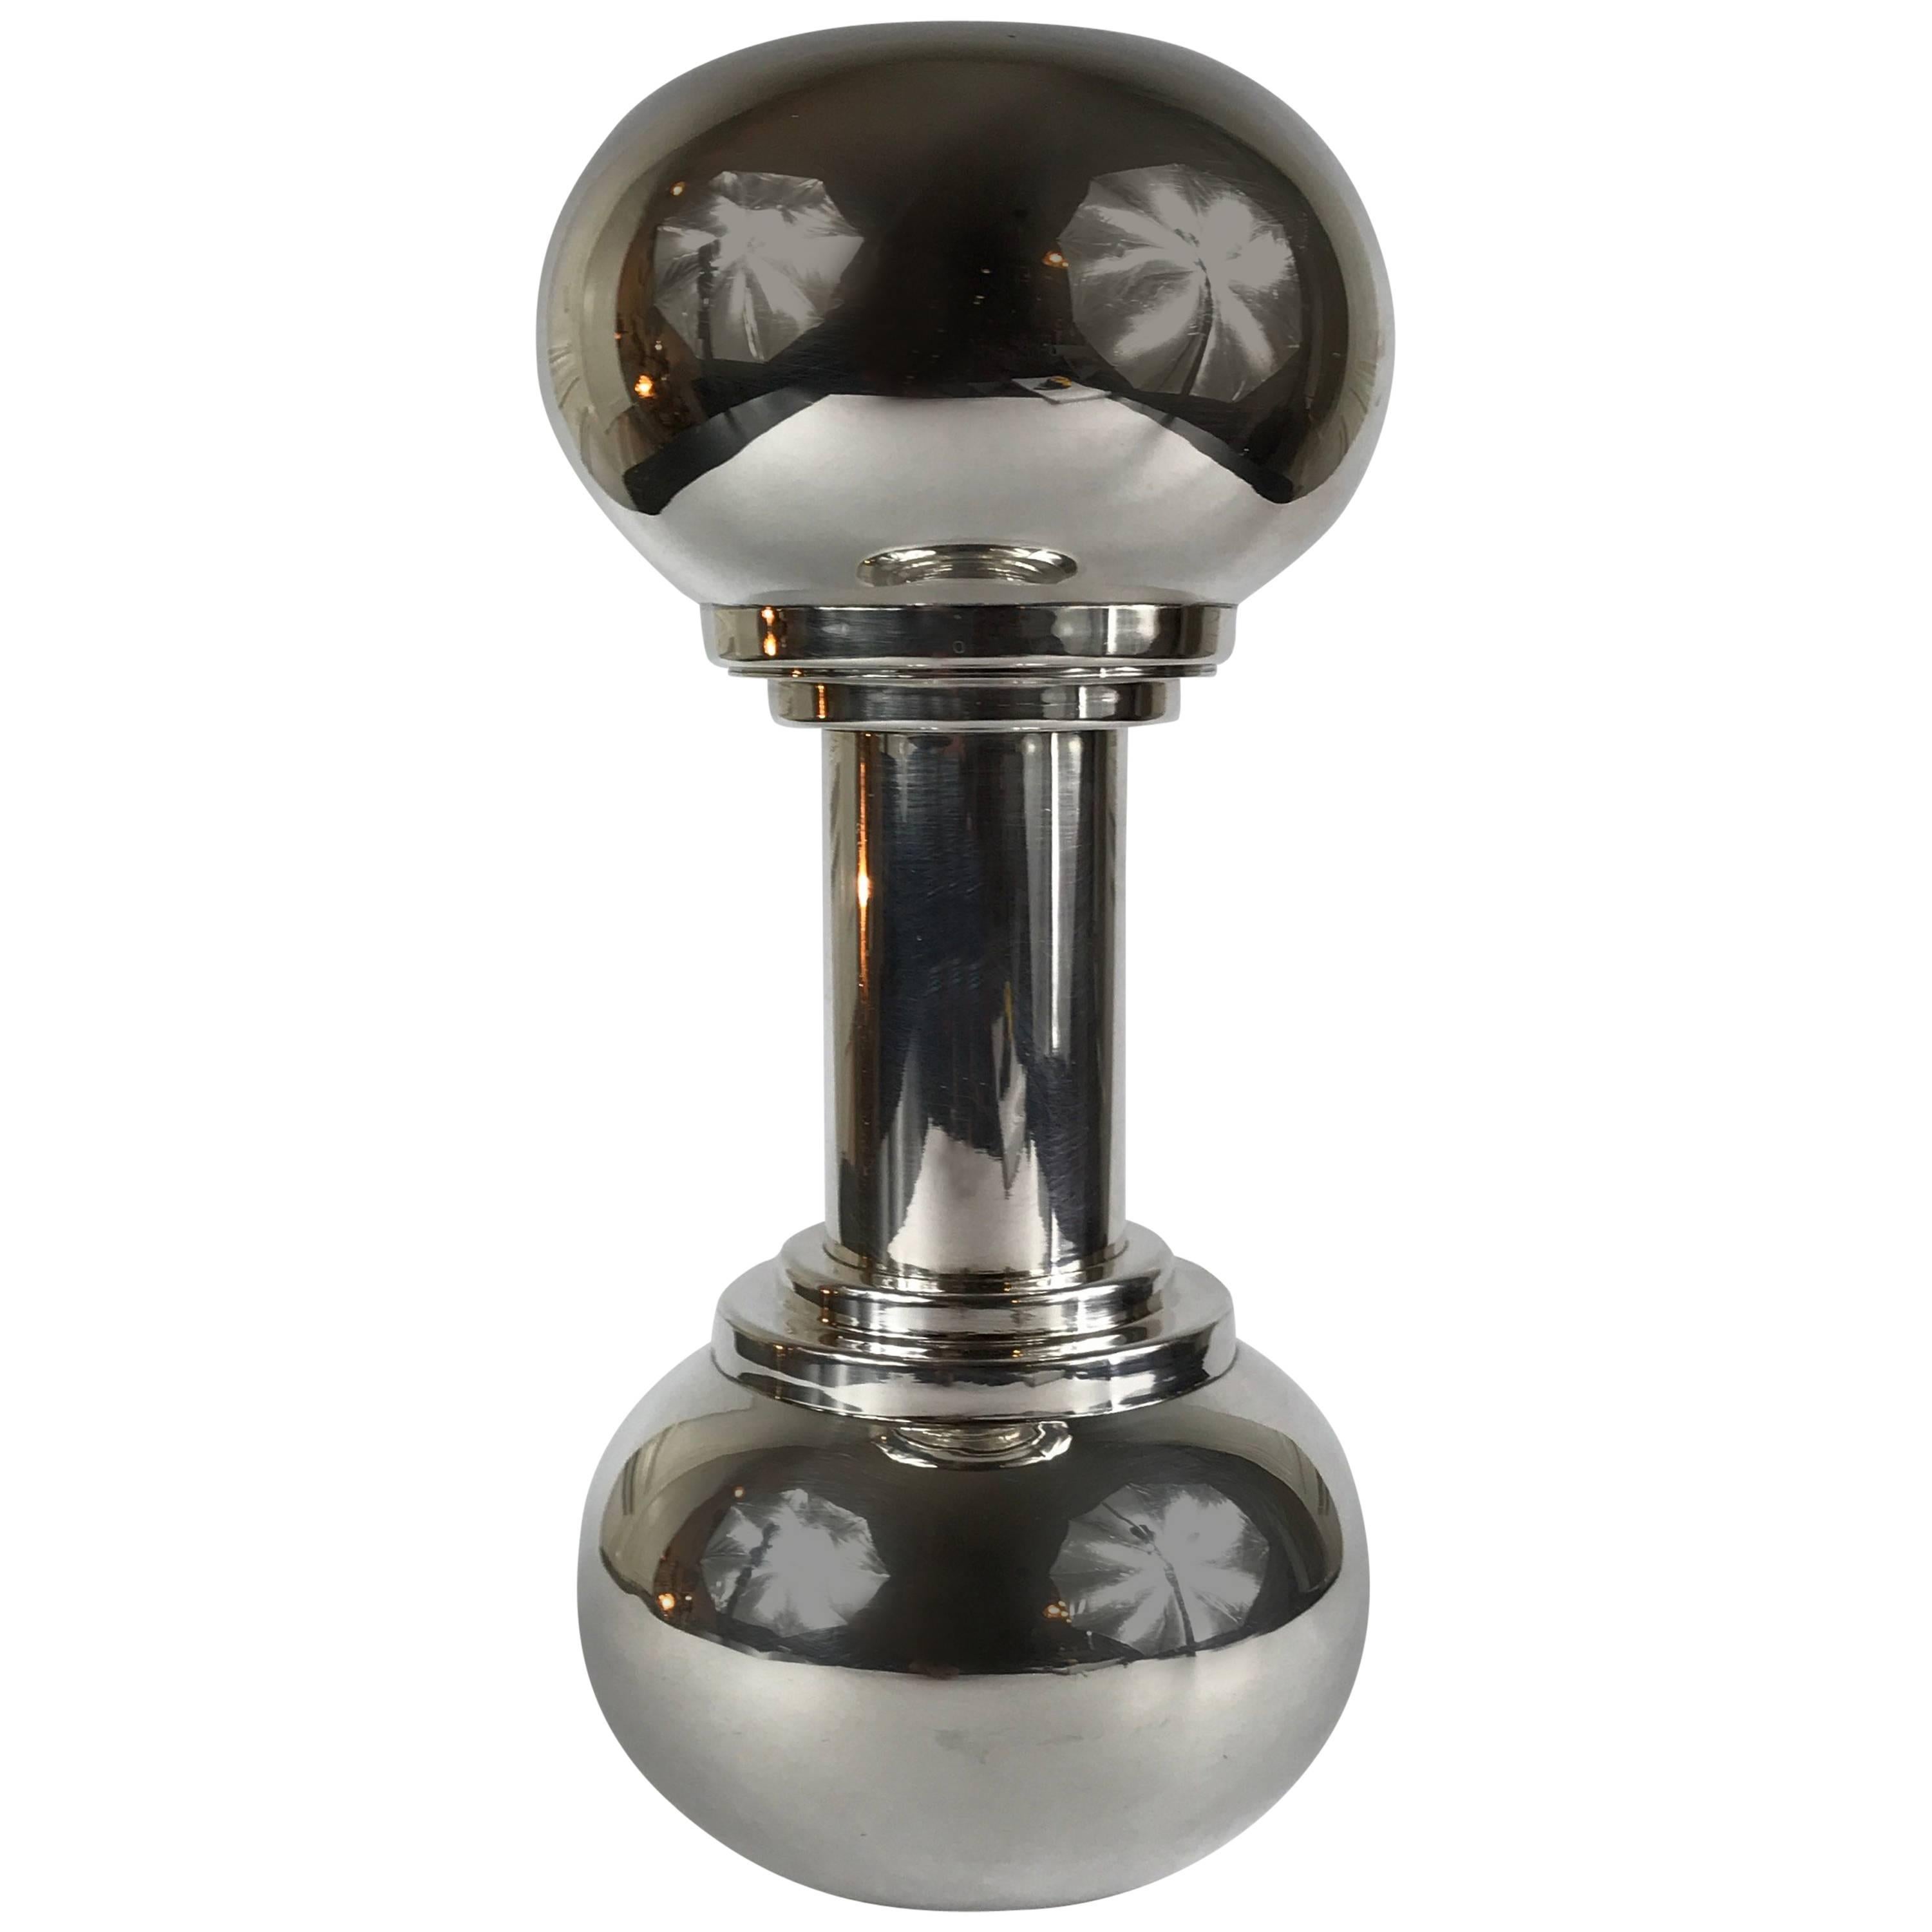 Art Deco "Dumb-Bell" Cocktail Shaker by Asprey & Co.